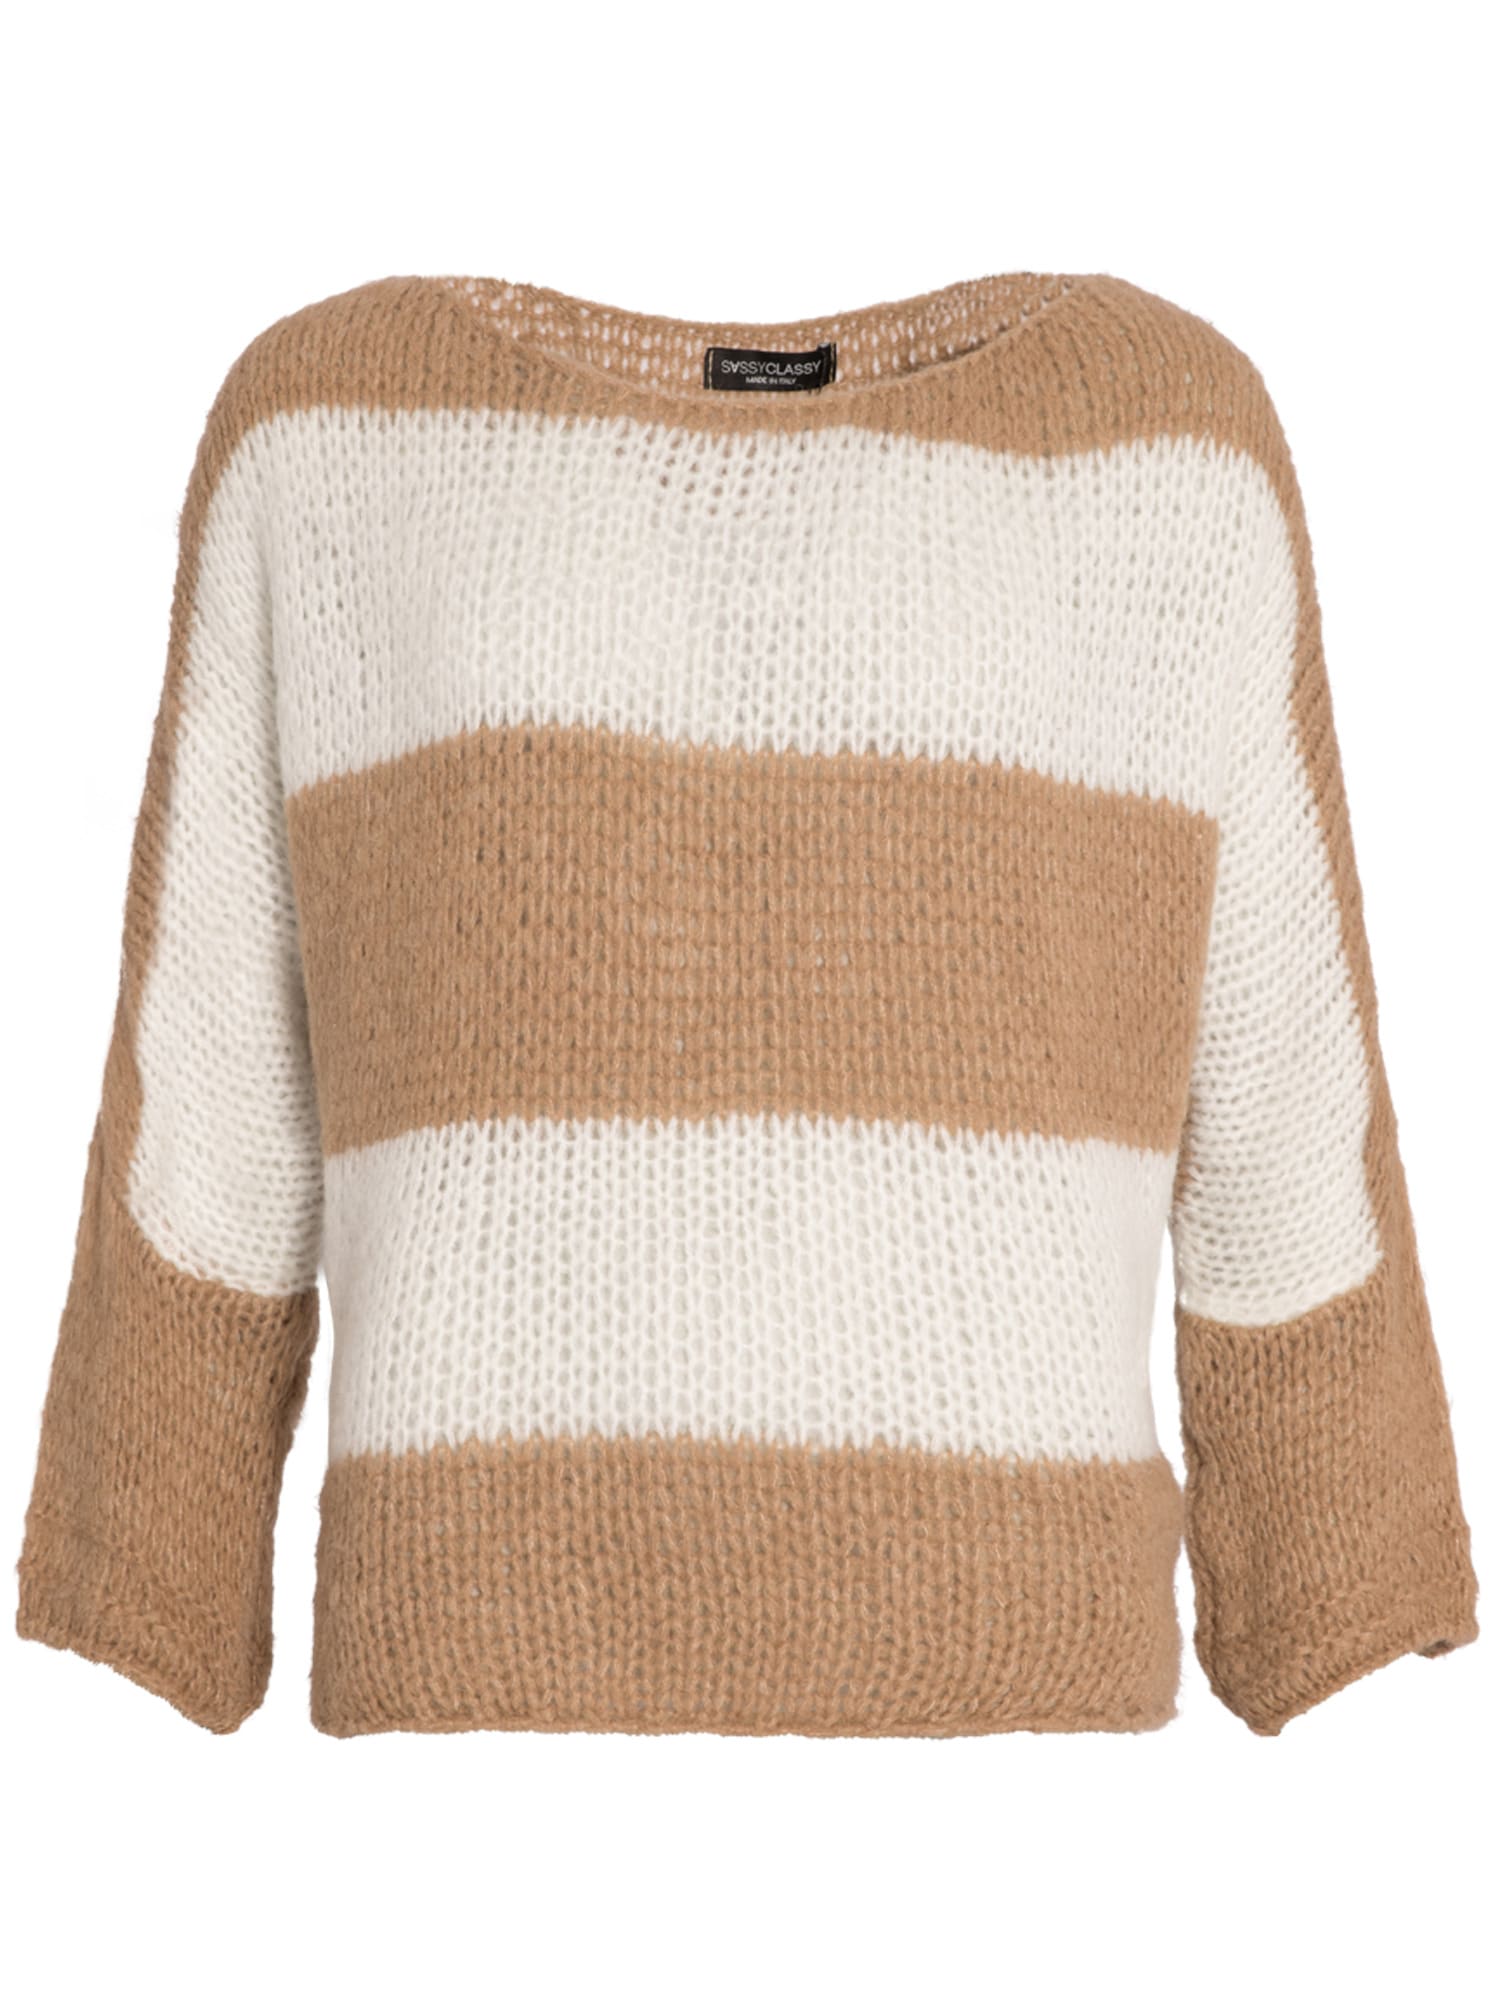 SASSYCLASSY Širok pulover  svetlo rjava / bela